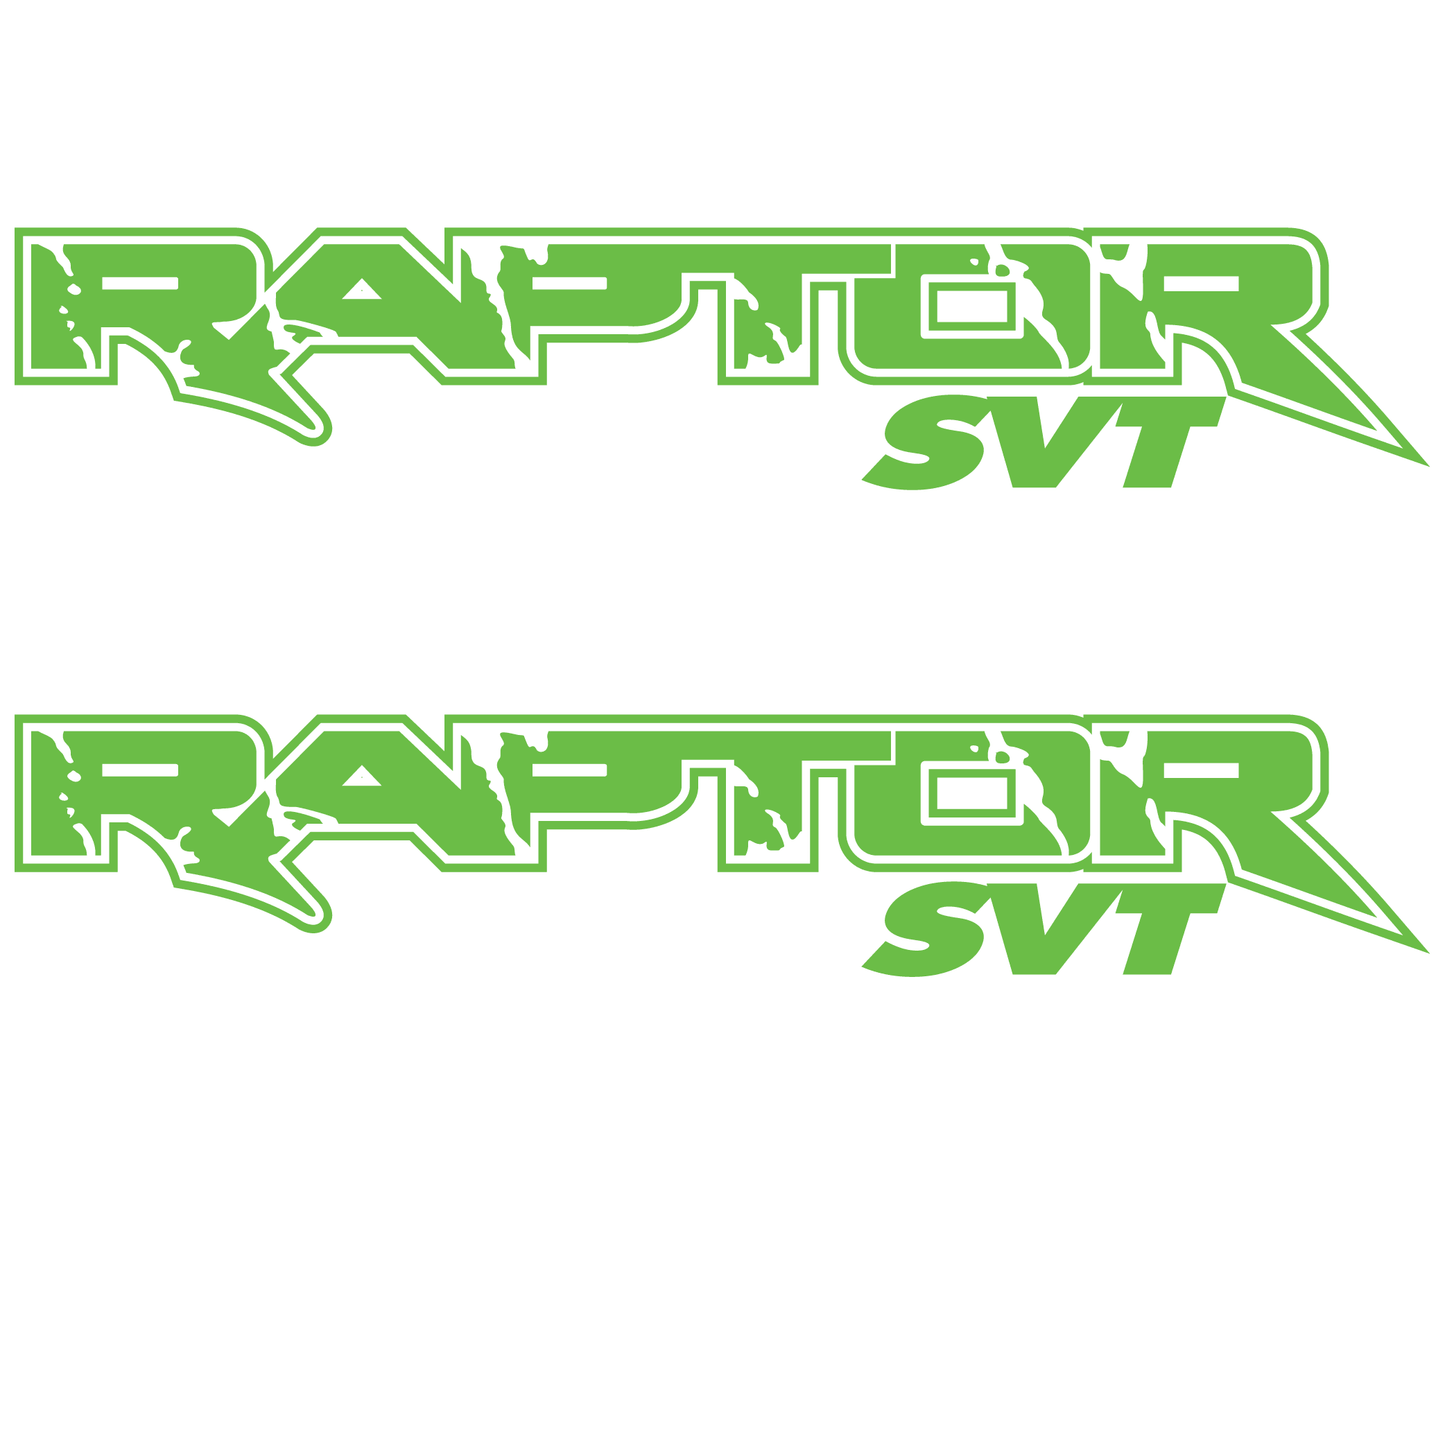 Shop Vinyl Design F-150 Raptor SVT Replacement Bedside Decals #010 Vehicle Decal Lime Gloss Shop Vinyl Design decals stickers